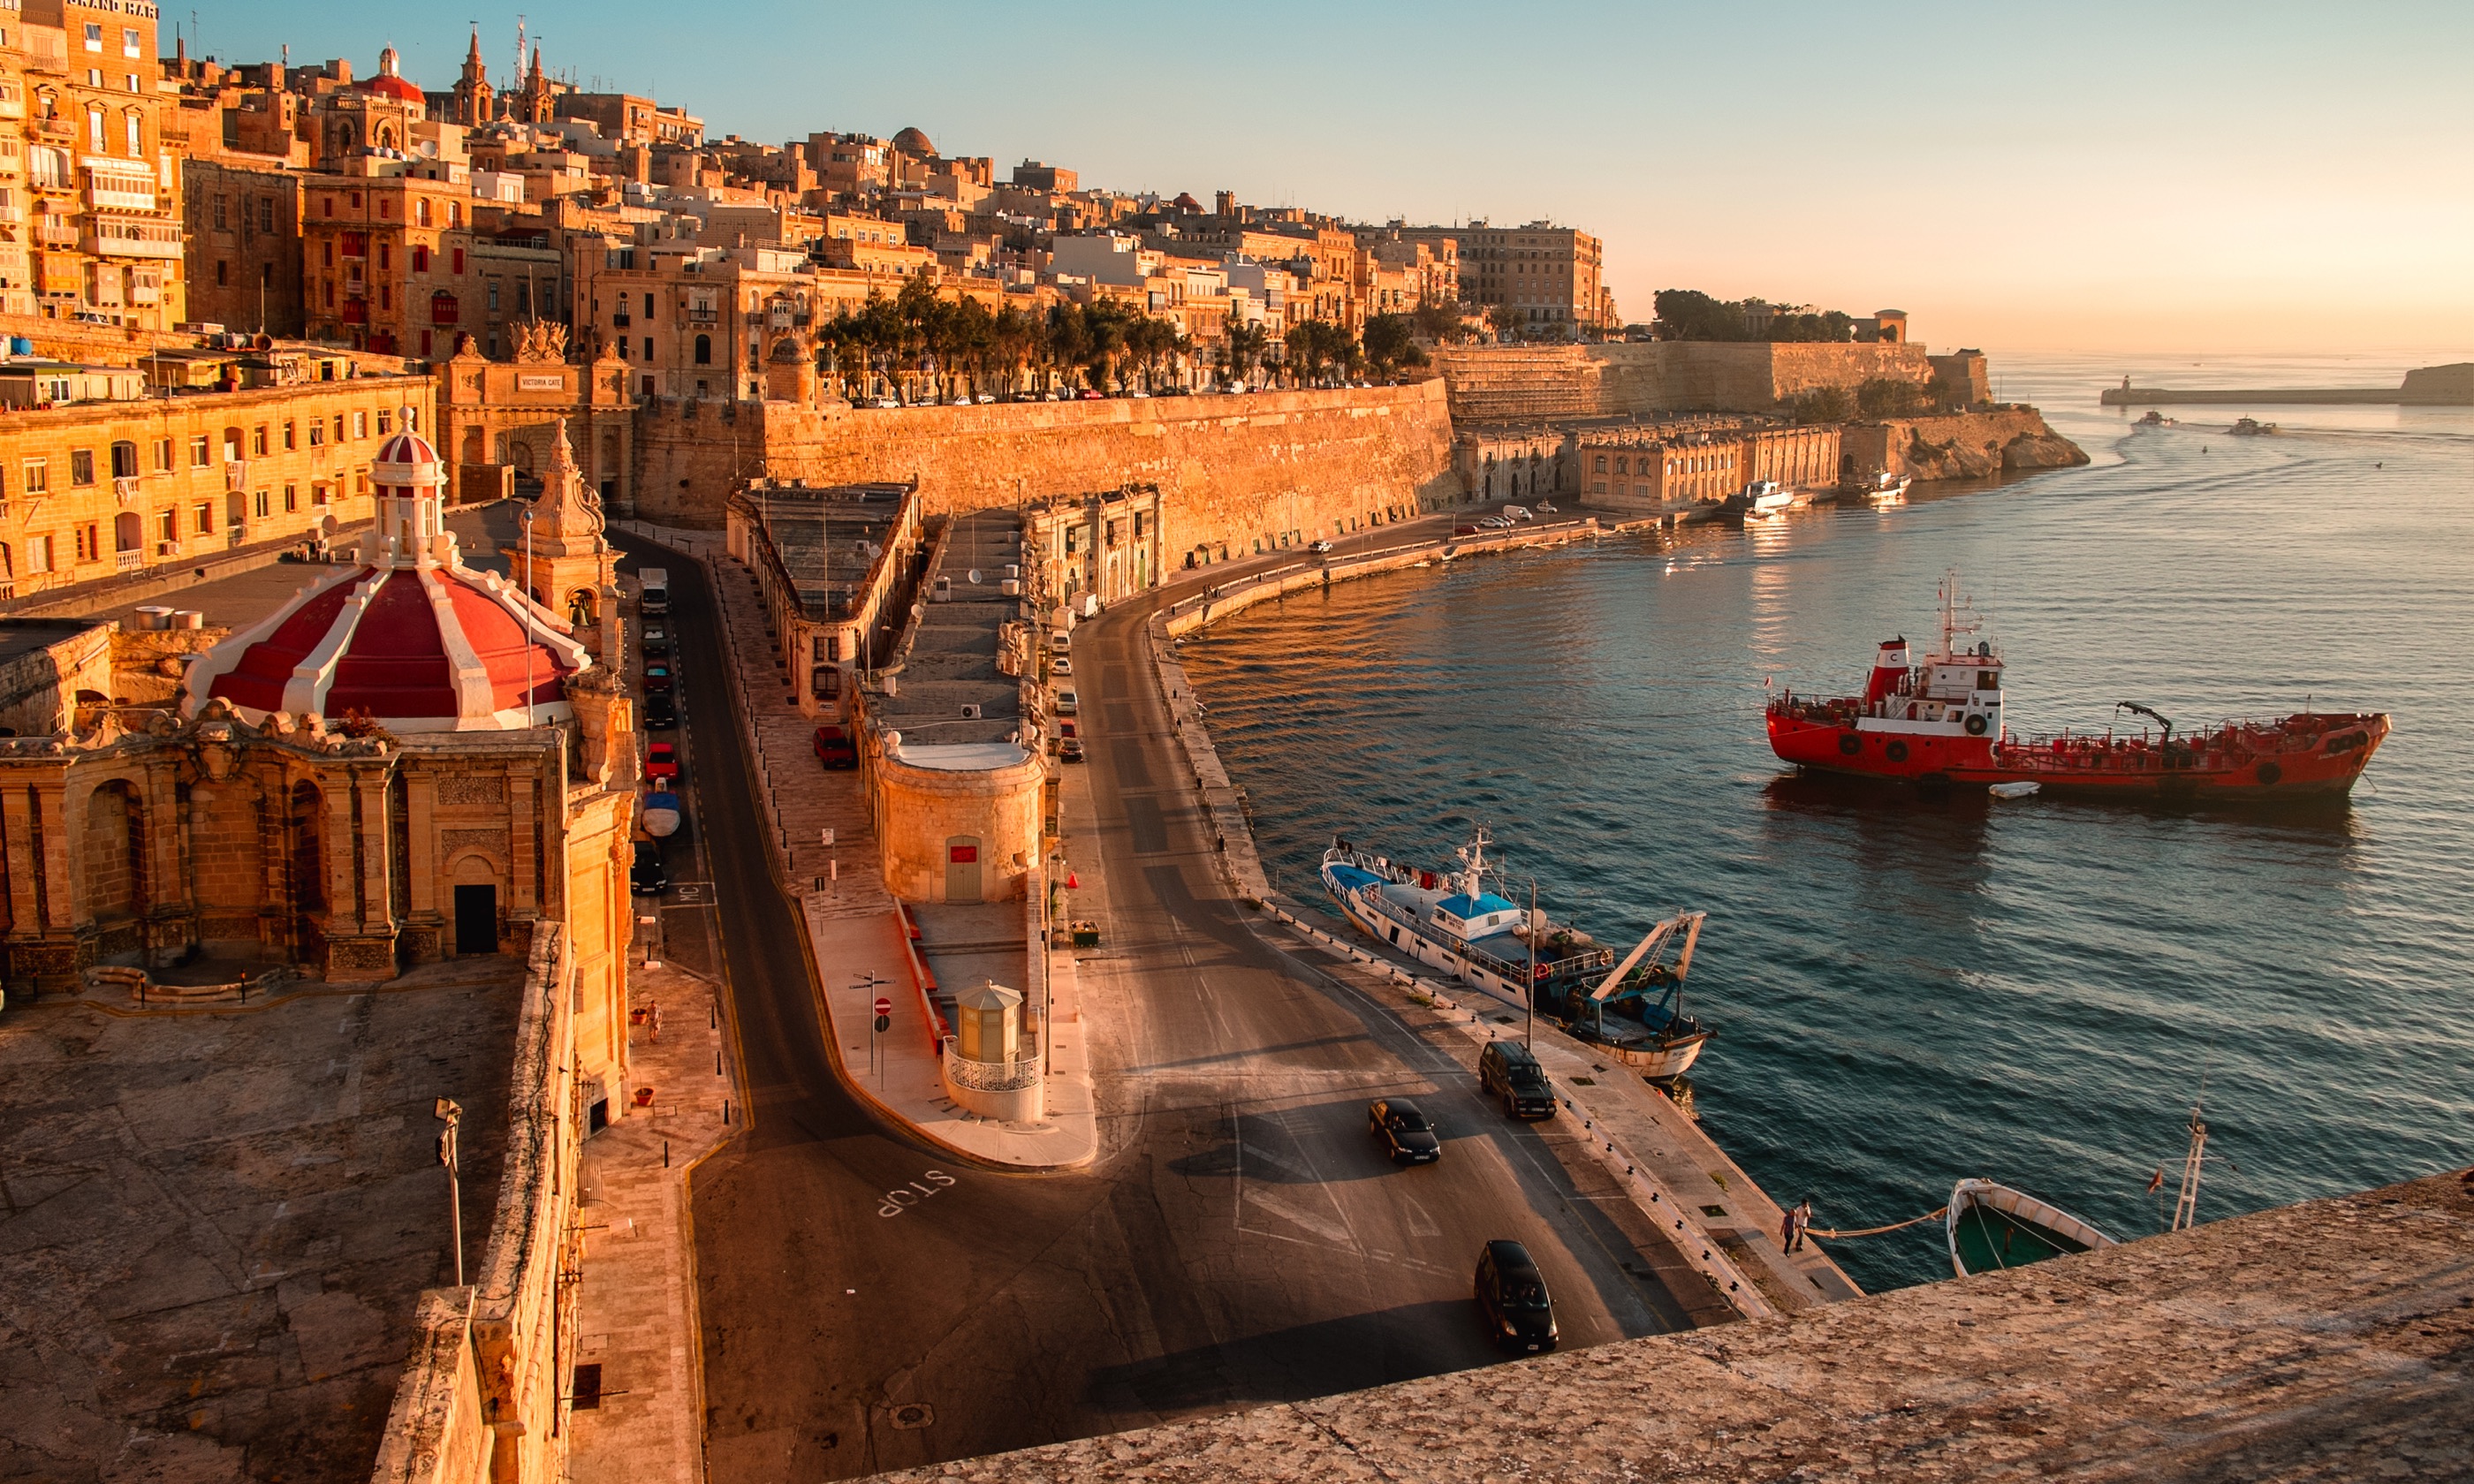 Ancient walls and streets of Valetta, Malta (Shutterstock.com)